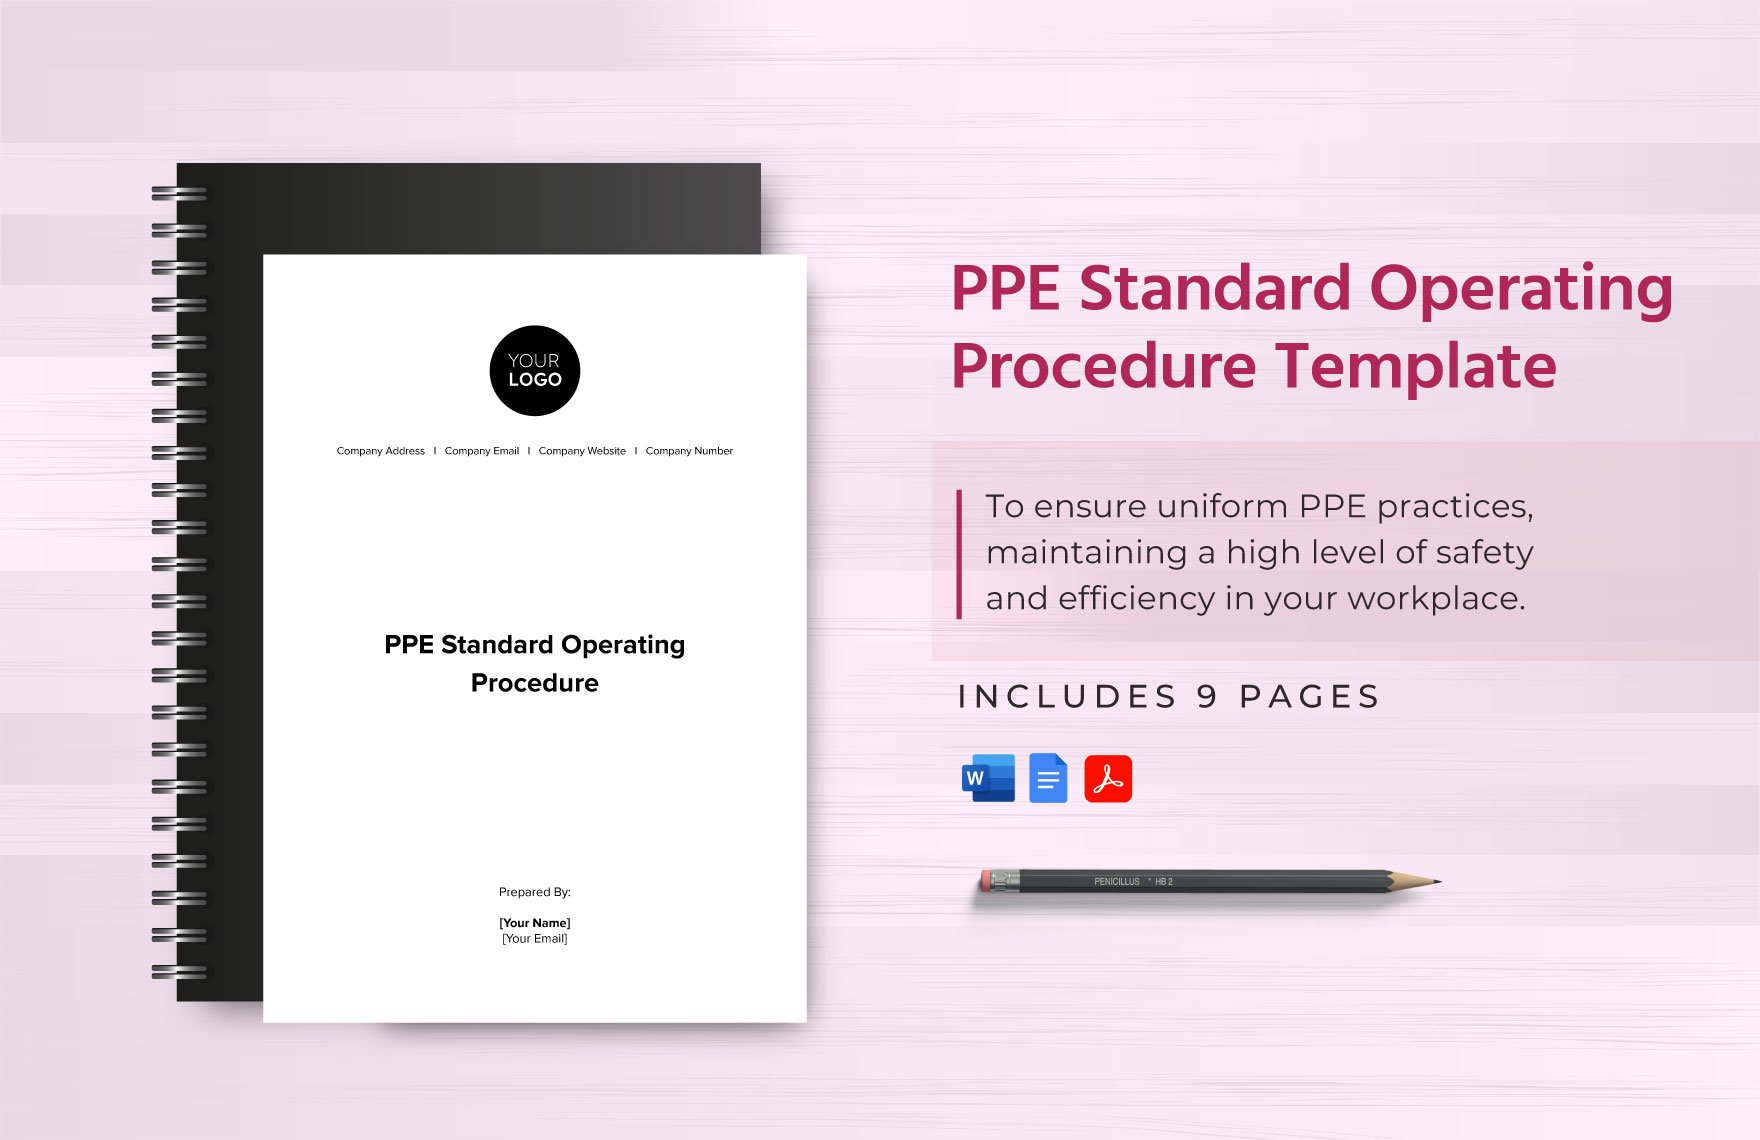 PPE Standard Operating Procedure Template